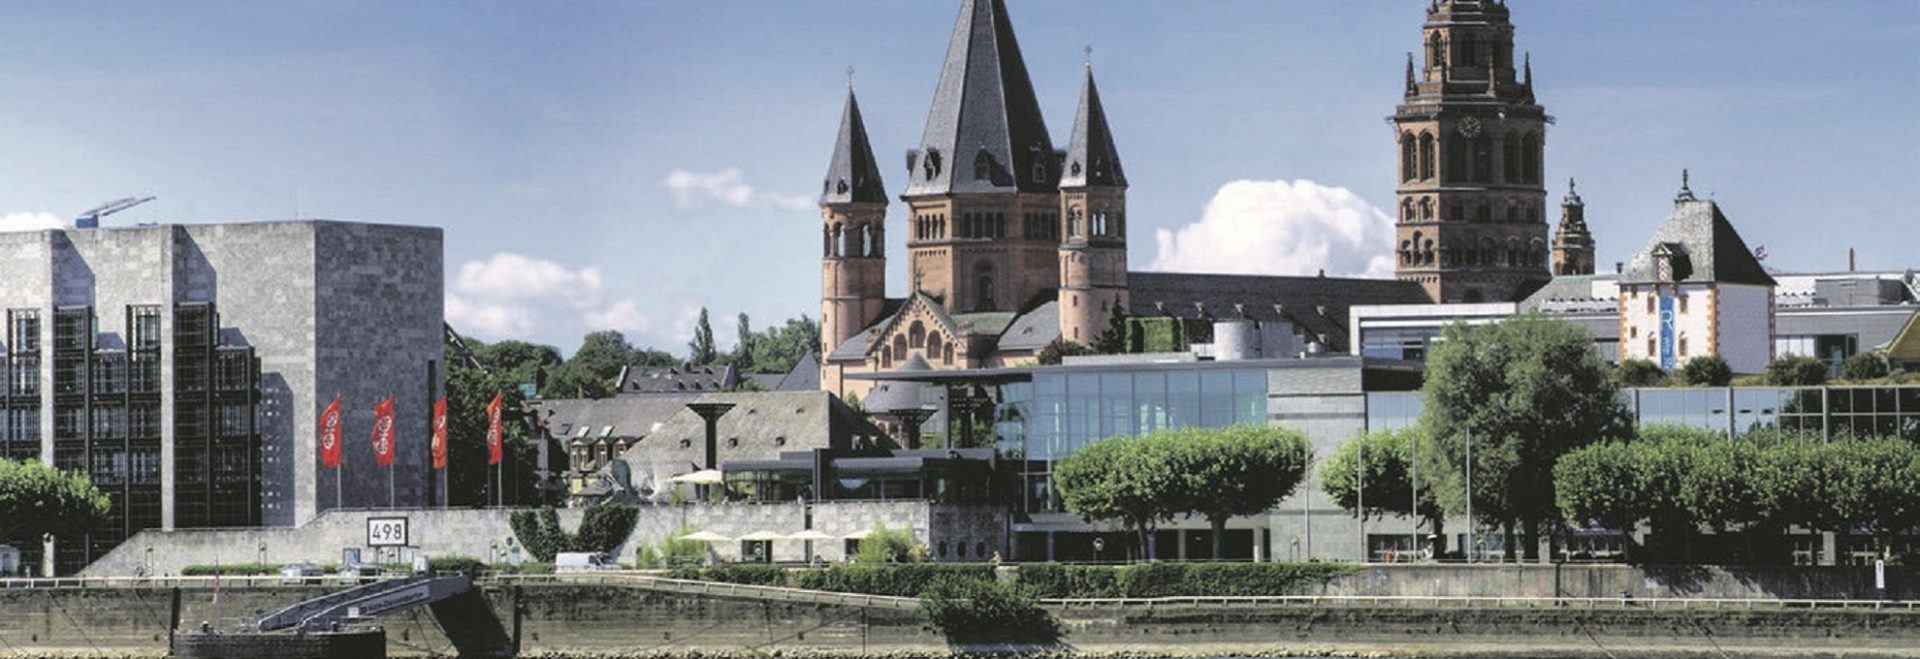 Rheinufer Mainz mit Dom